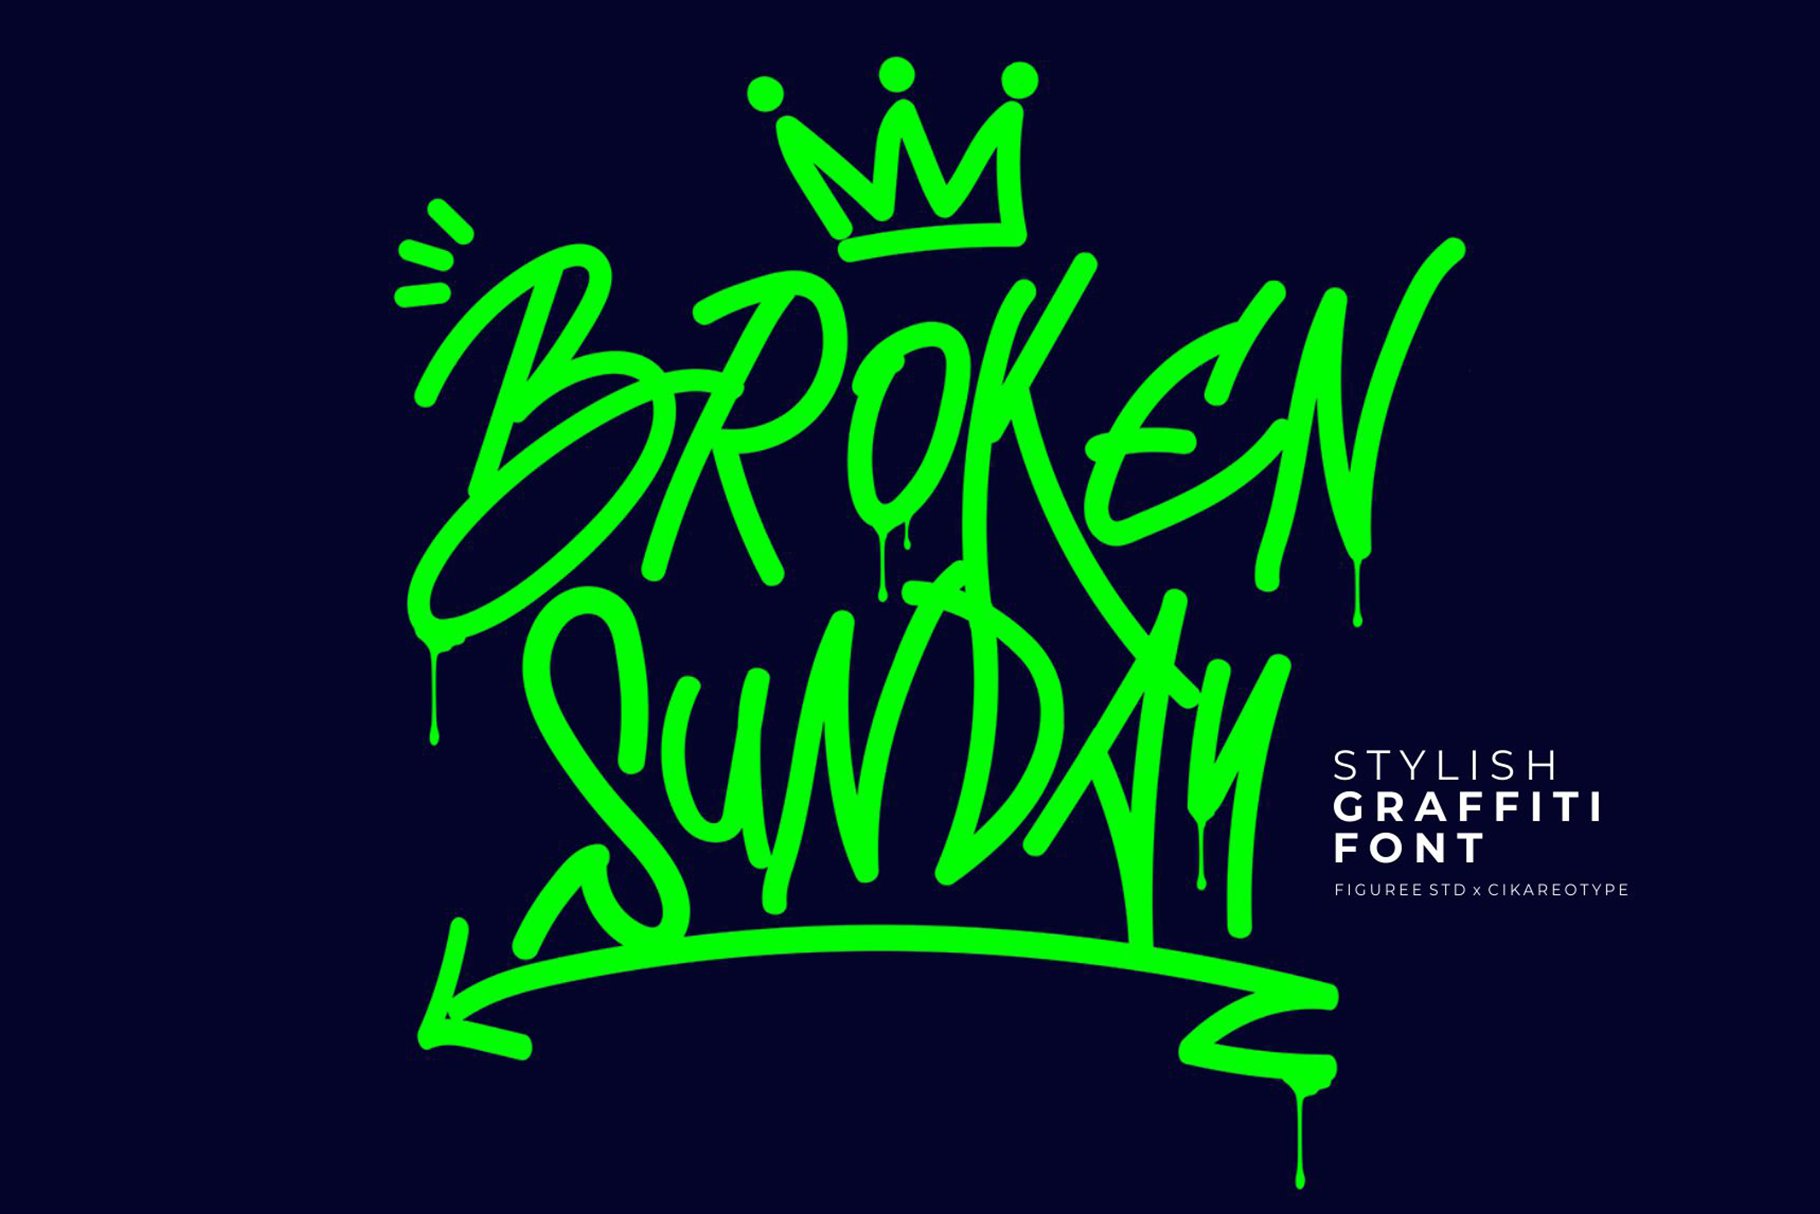 Broken Sunday - Stylish Graffiti cover image.